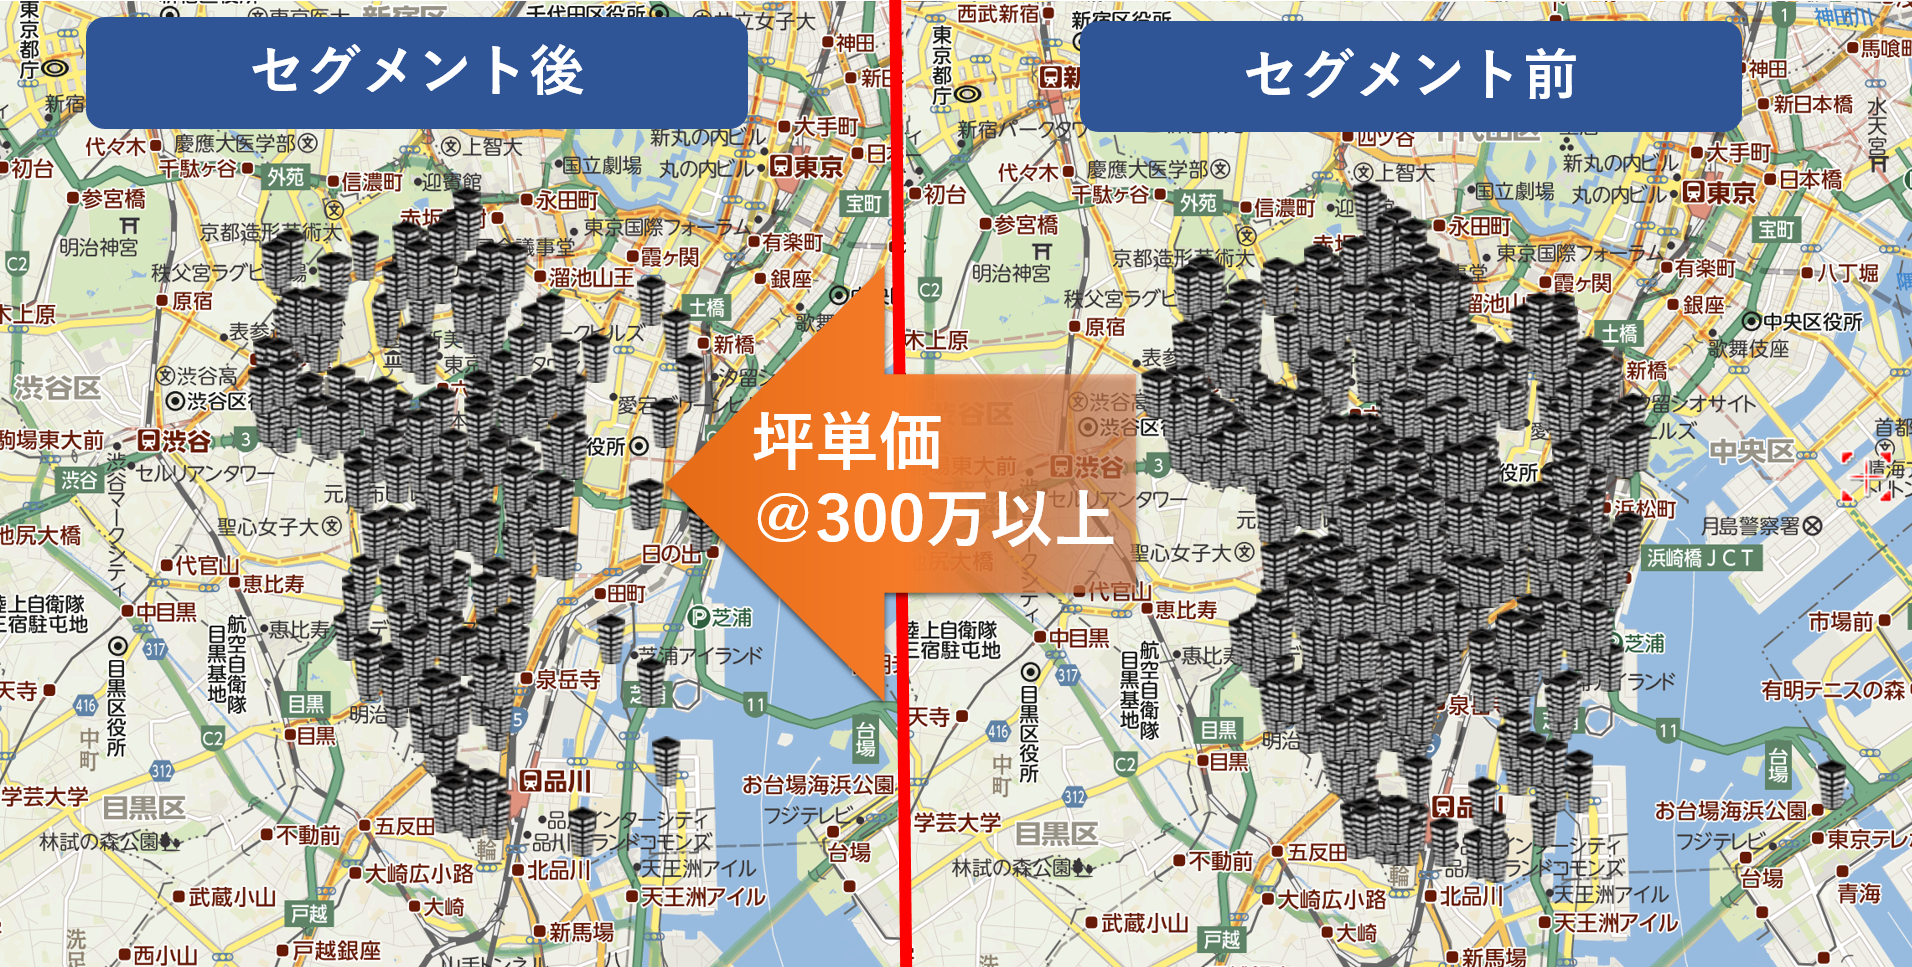 ab66b019b16fdb5a3e1a0e060f20a985 - 東京都港区のポスティングで富裕層を狙うために新聞折込部数・軒並み配布・ディマールで比較検証してみる